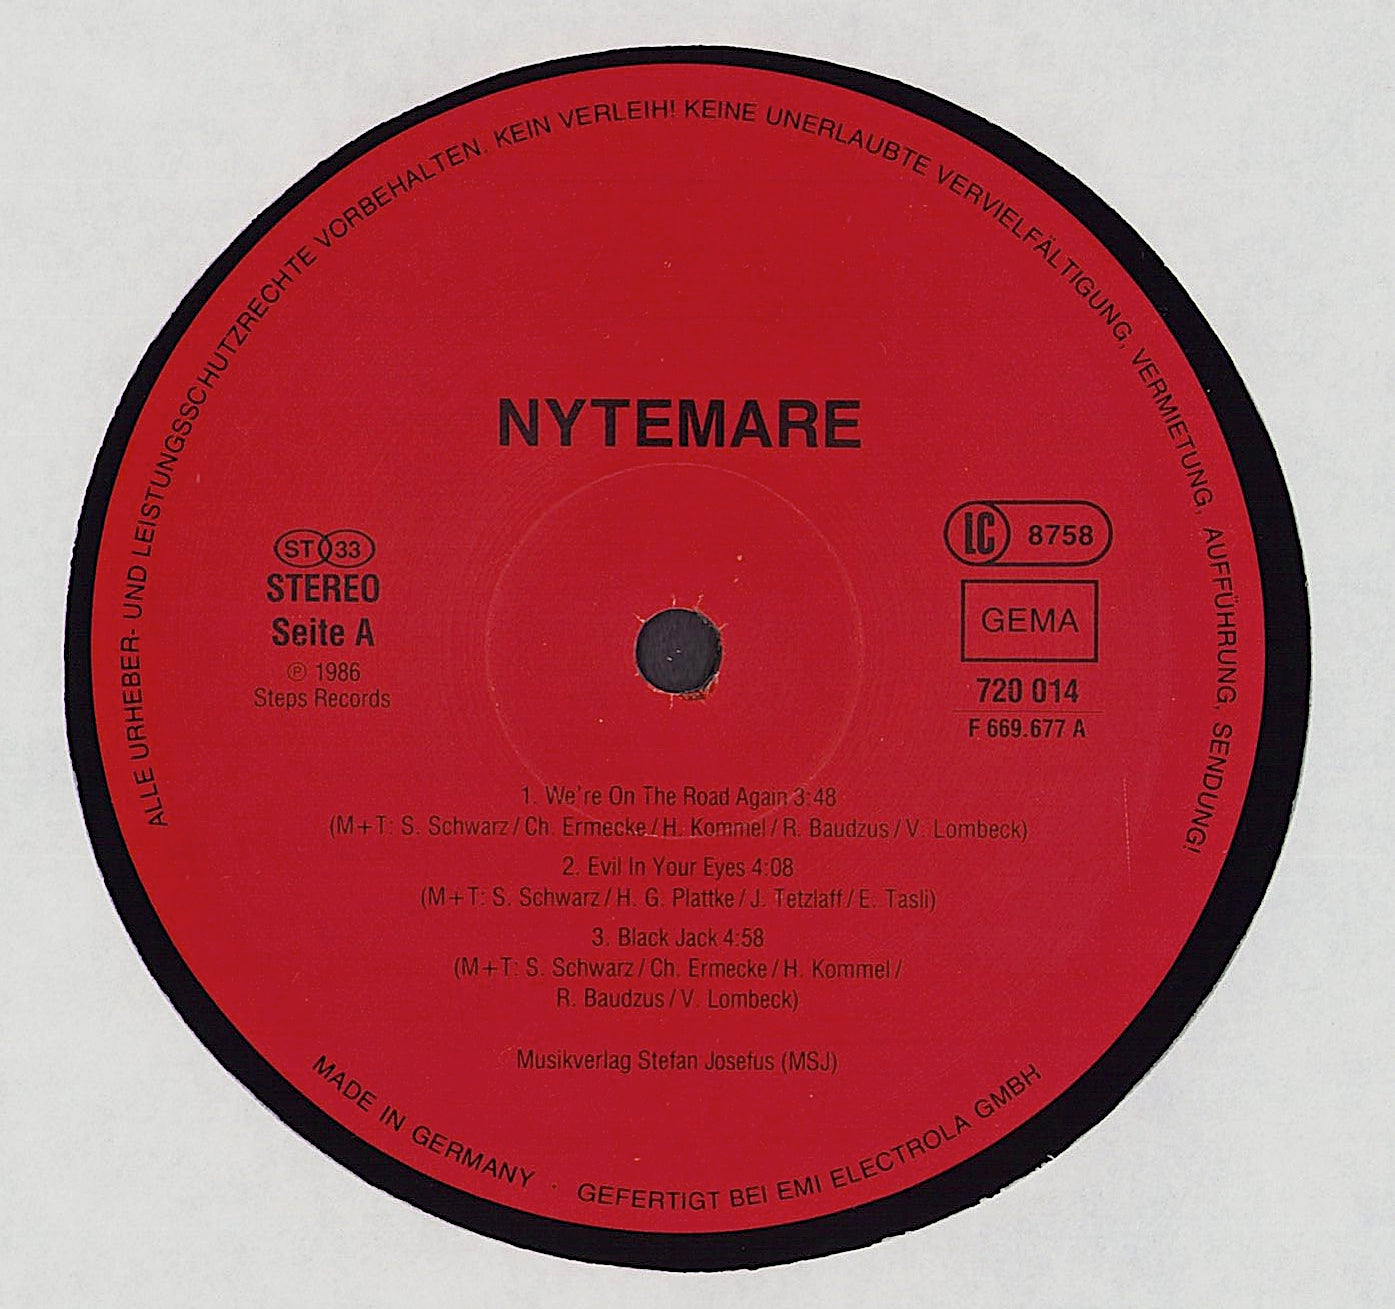 Nytemare - Nytemare Vinyl 12" Mini-Album